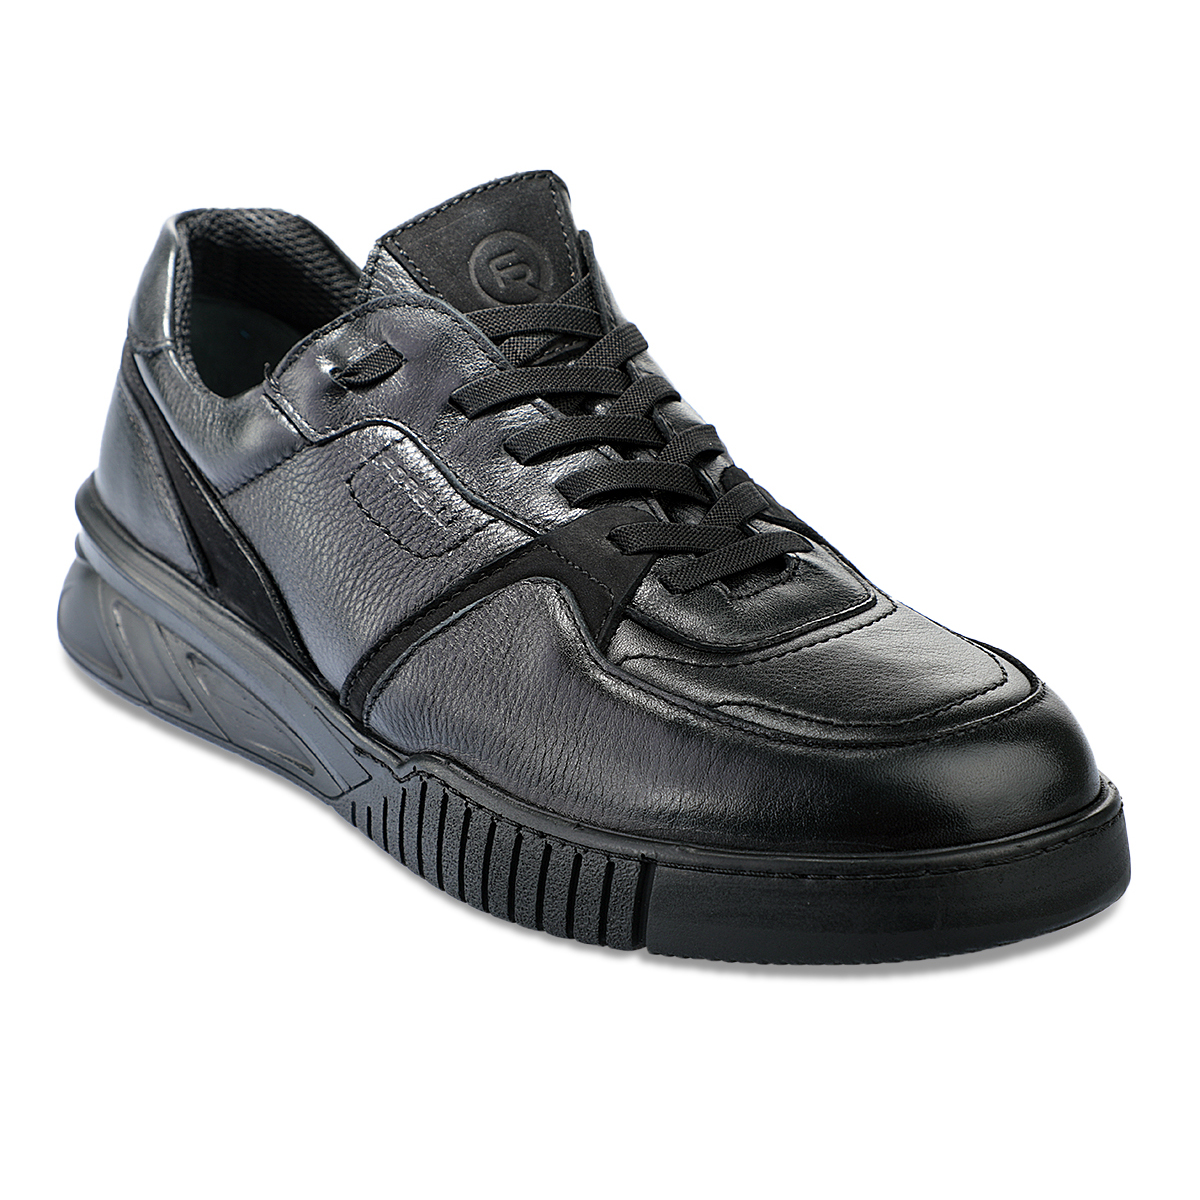 Forelli - Forelli HECTOR-H Comfort Erkek Ayakkabı Siyah